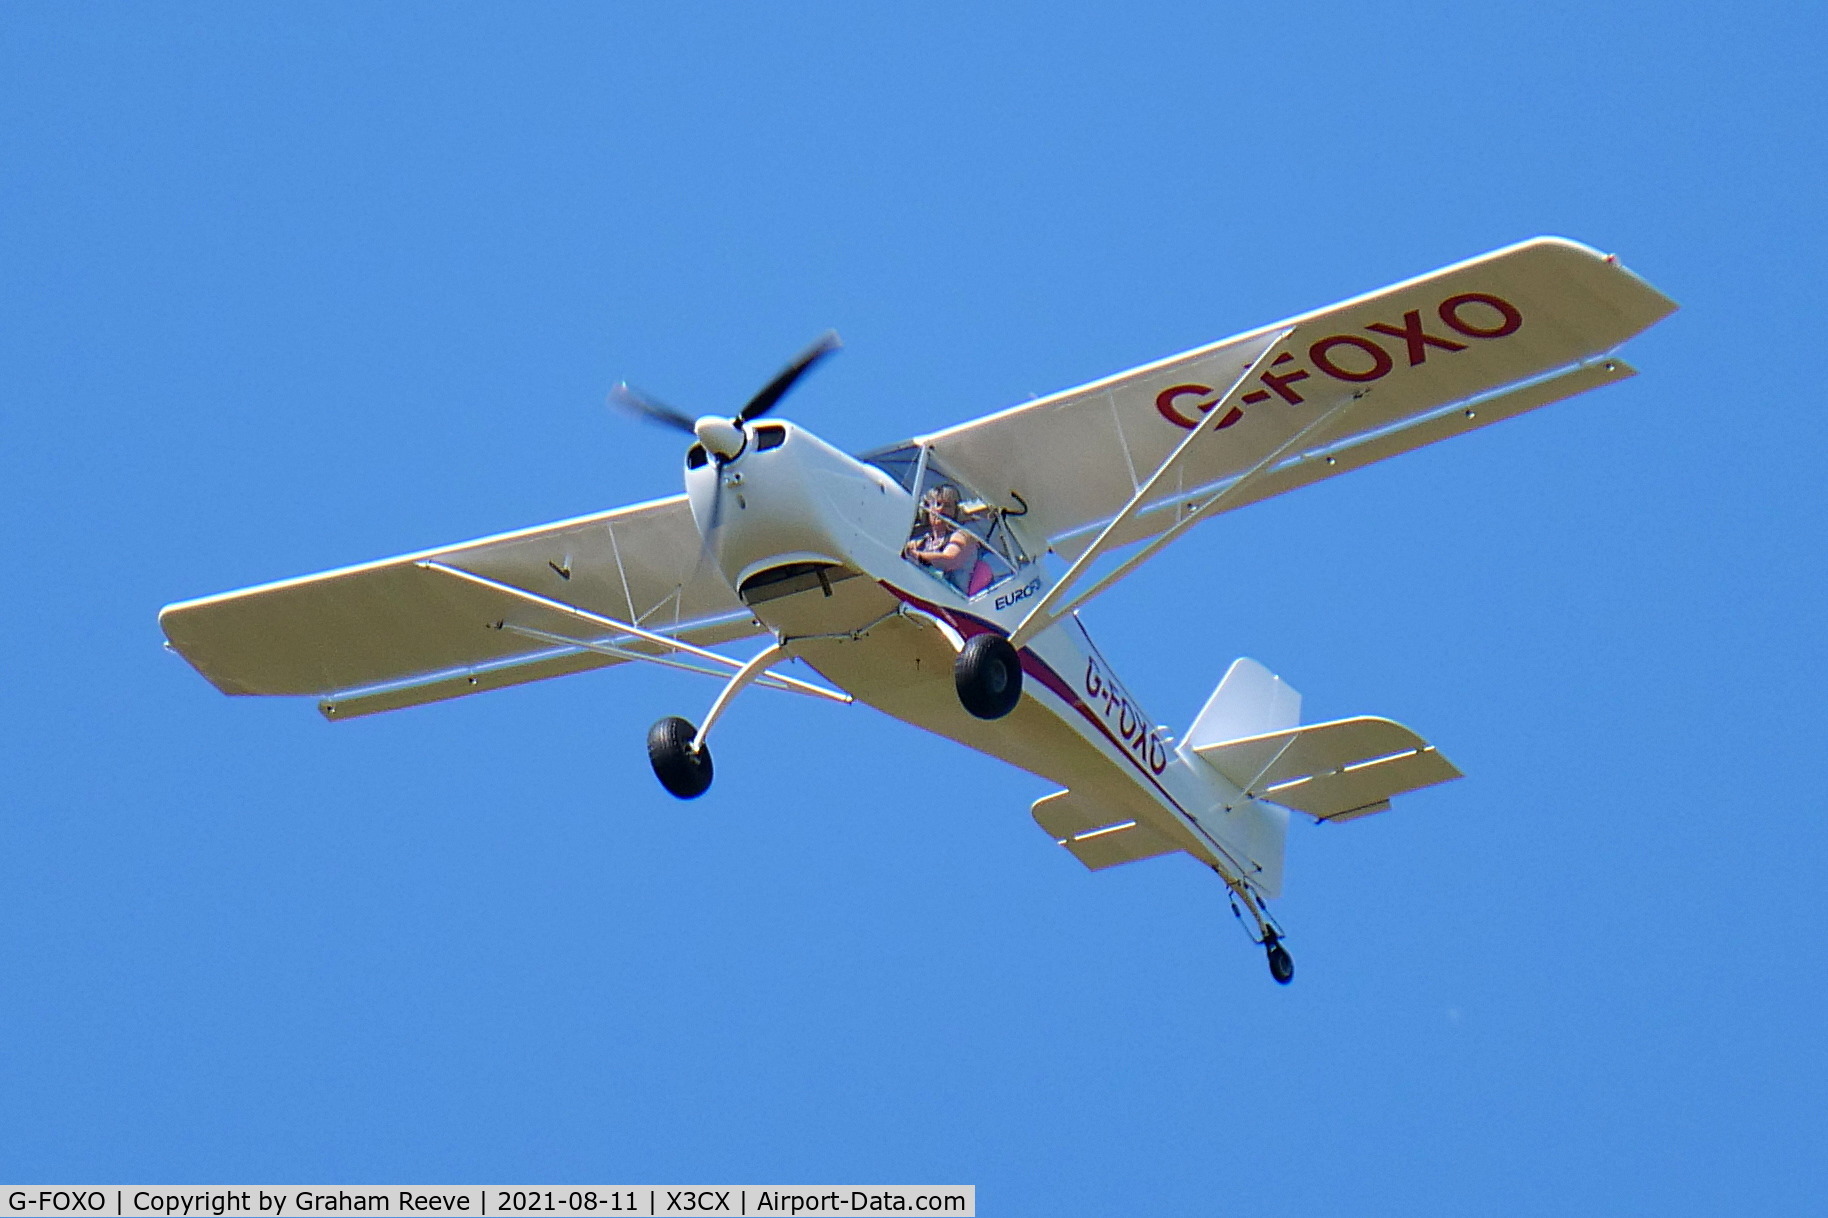 G-FOXO, 2014 Aeropro Eurofox 912(S) C/N LAA 376-15165, Over head at Northrepps.